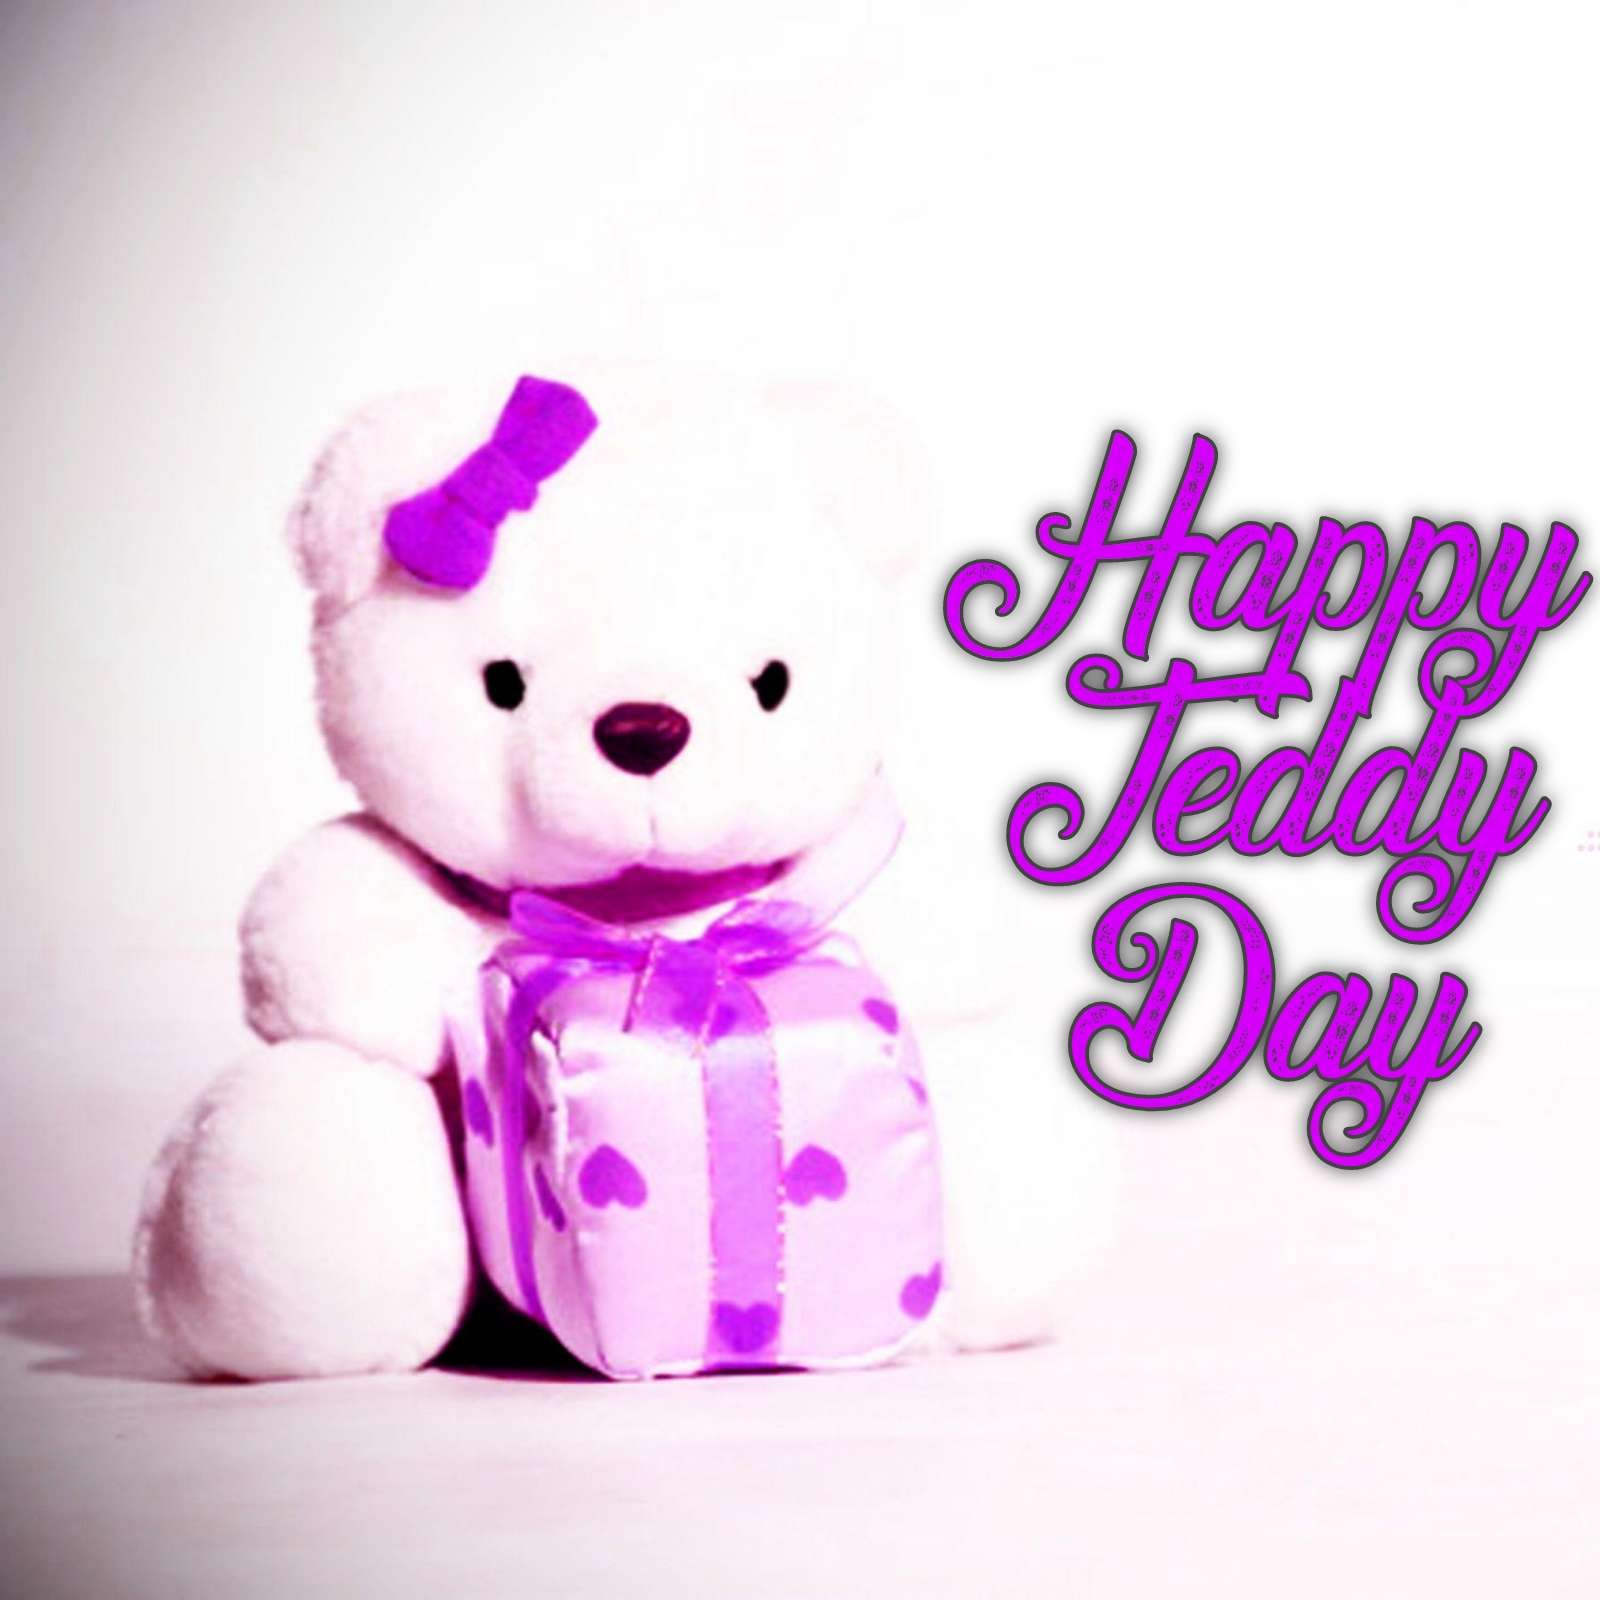 Happy Teddyday Pic Download